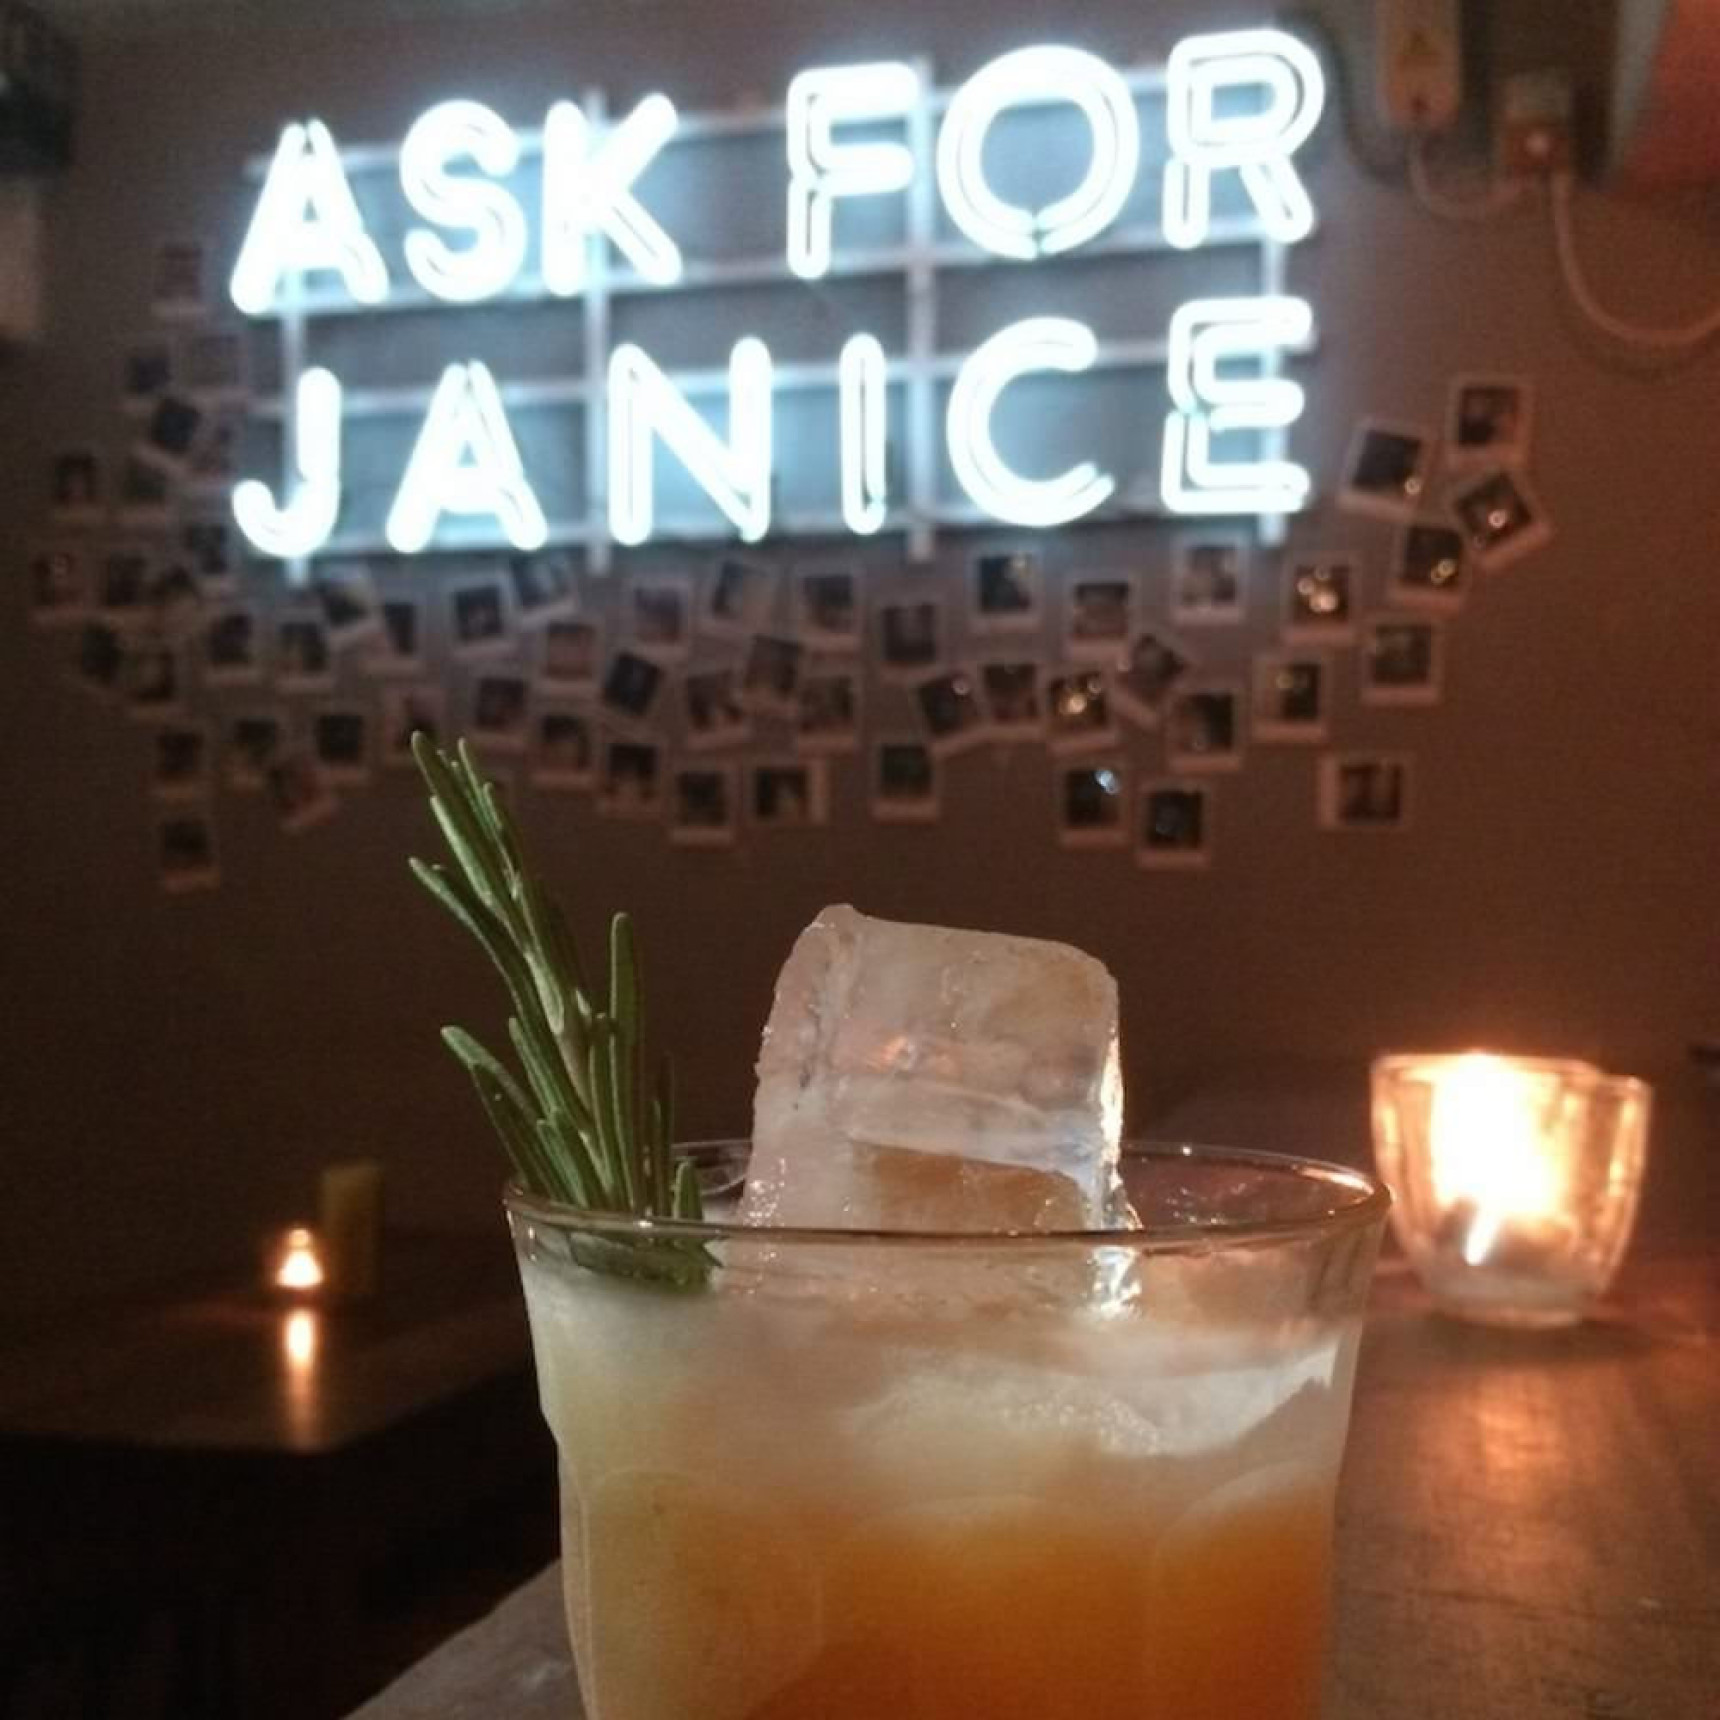 Ask Janice